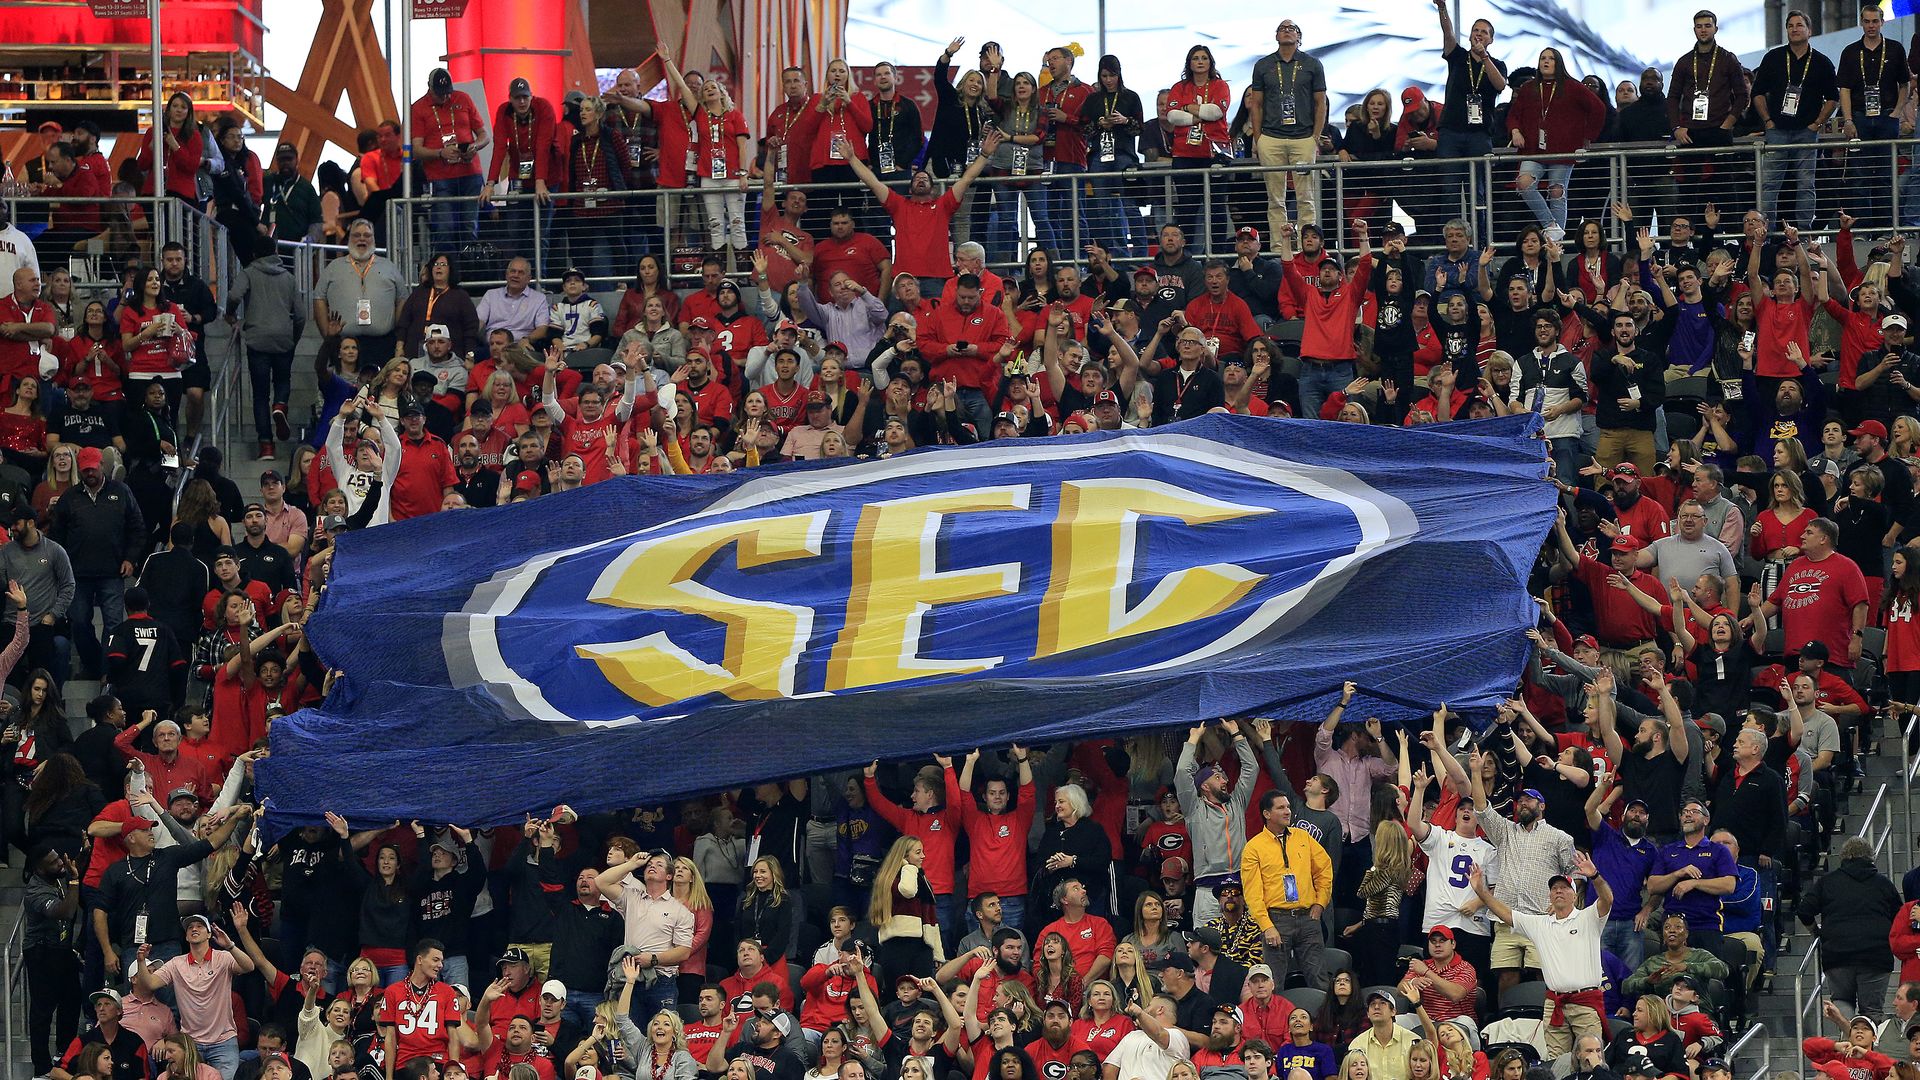 Fans pass along huge SEC banner at football game